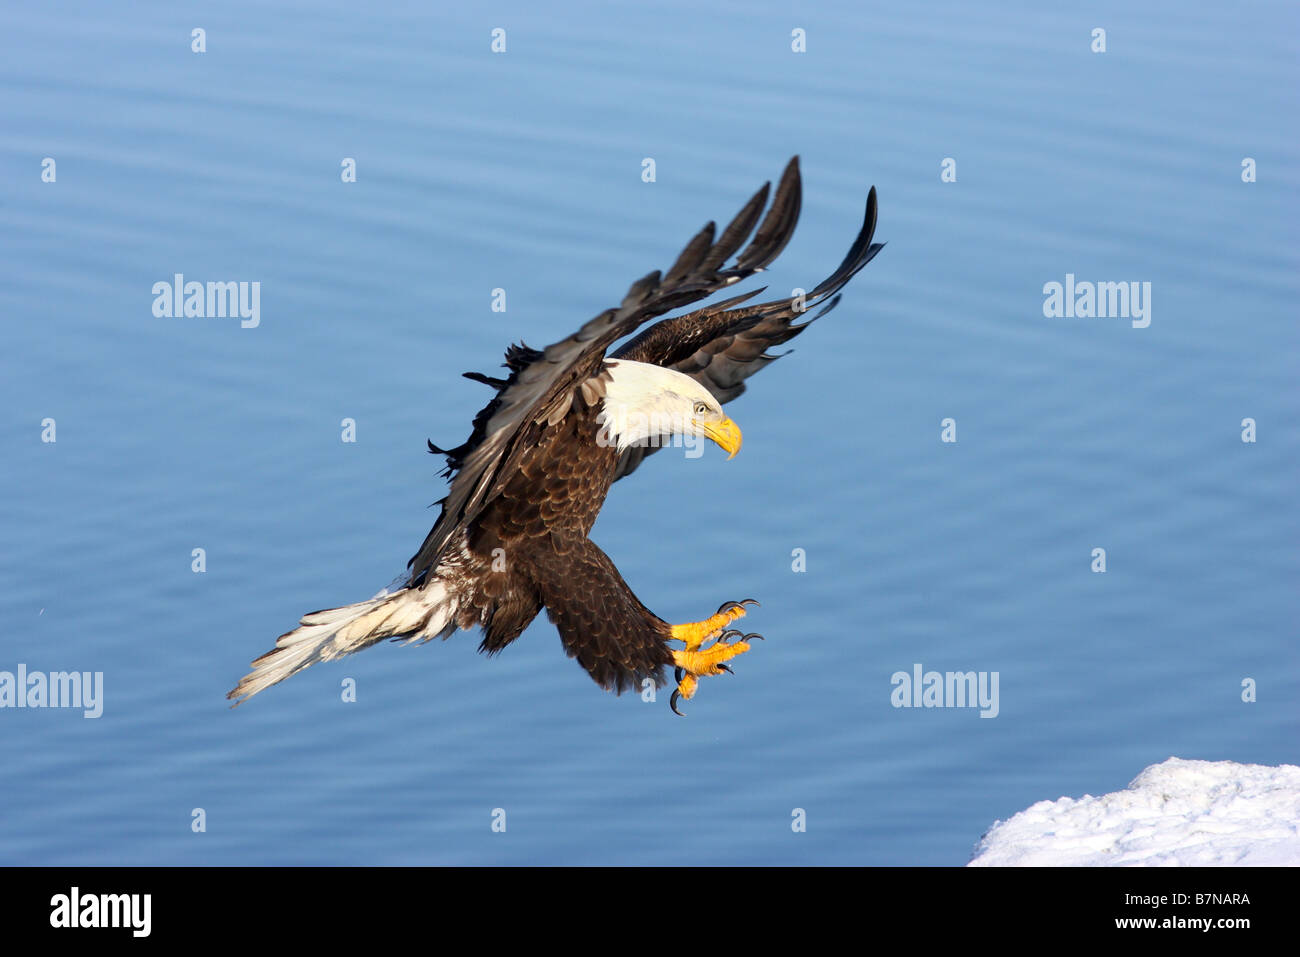 Aquila calva Haliaeetus leucocephalus Homer Alaska Stati Uniti febbraio adulto lo sbarco su ghiaccio Accipitridae Foto Stock